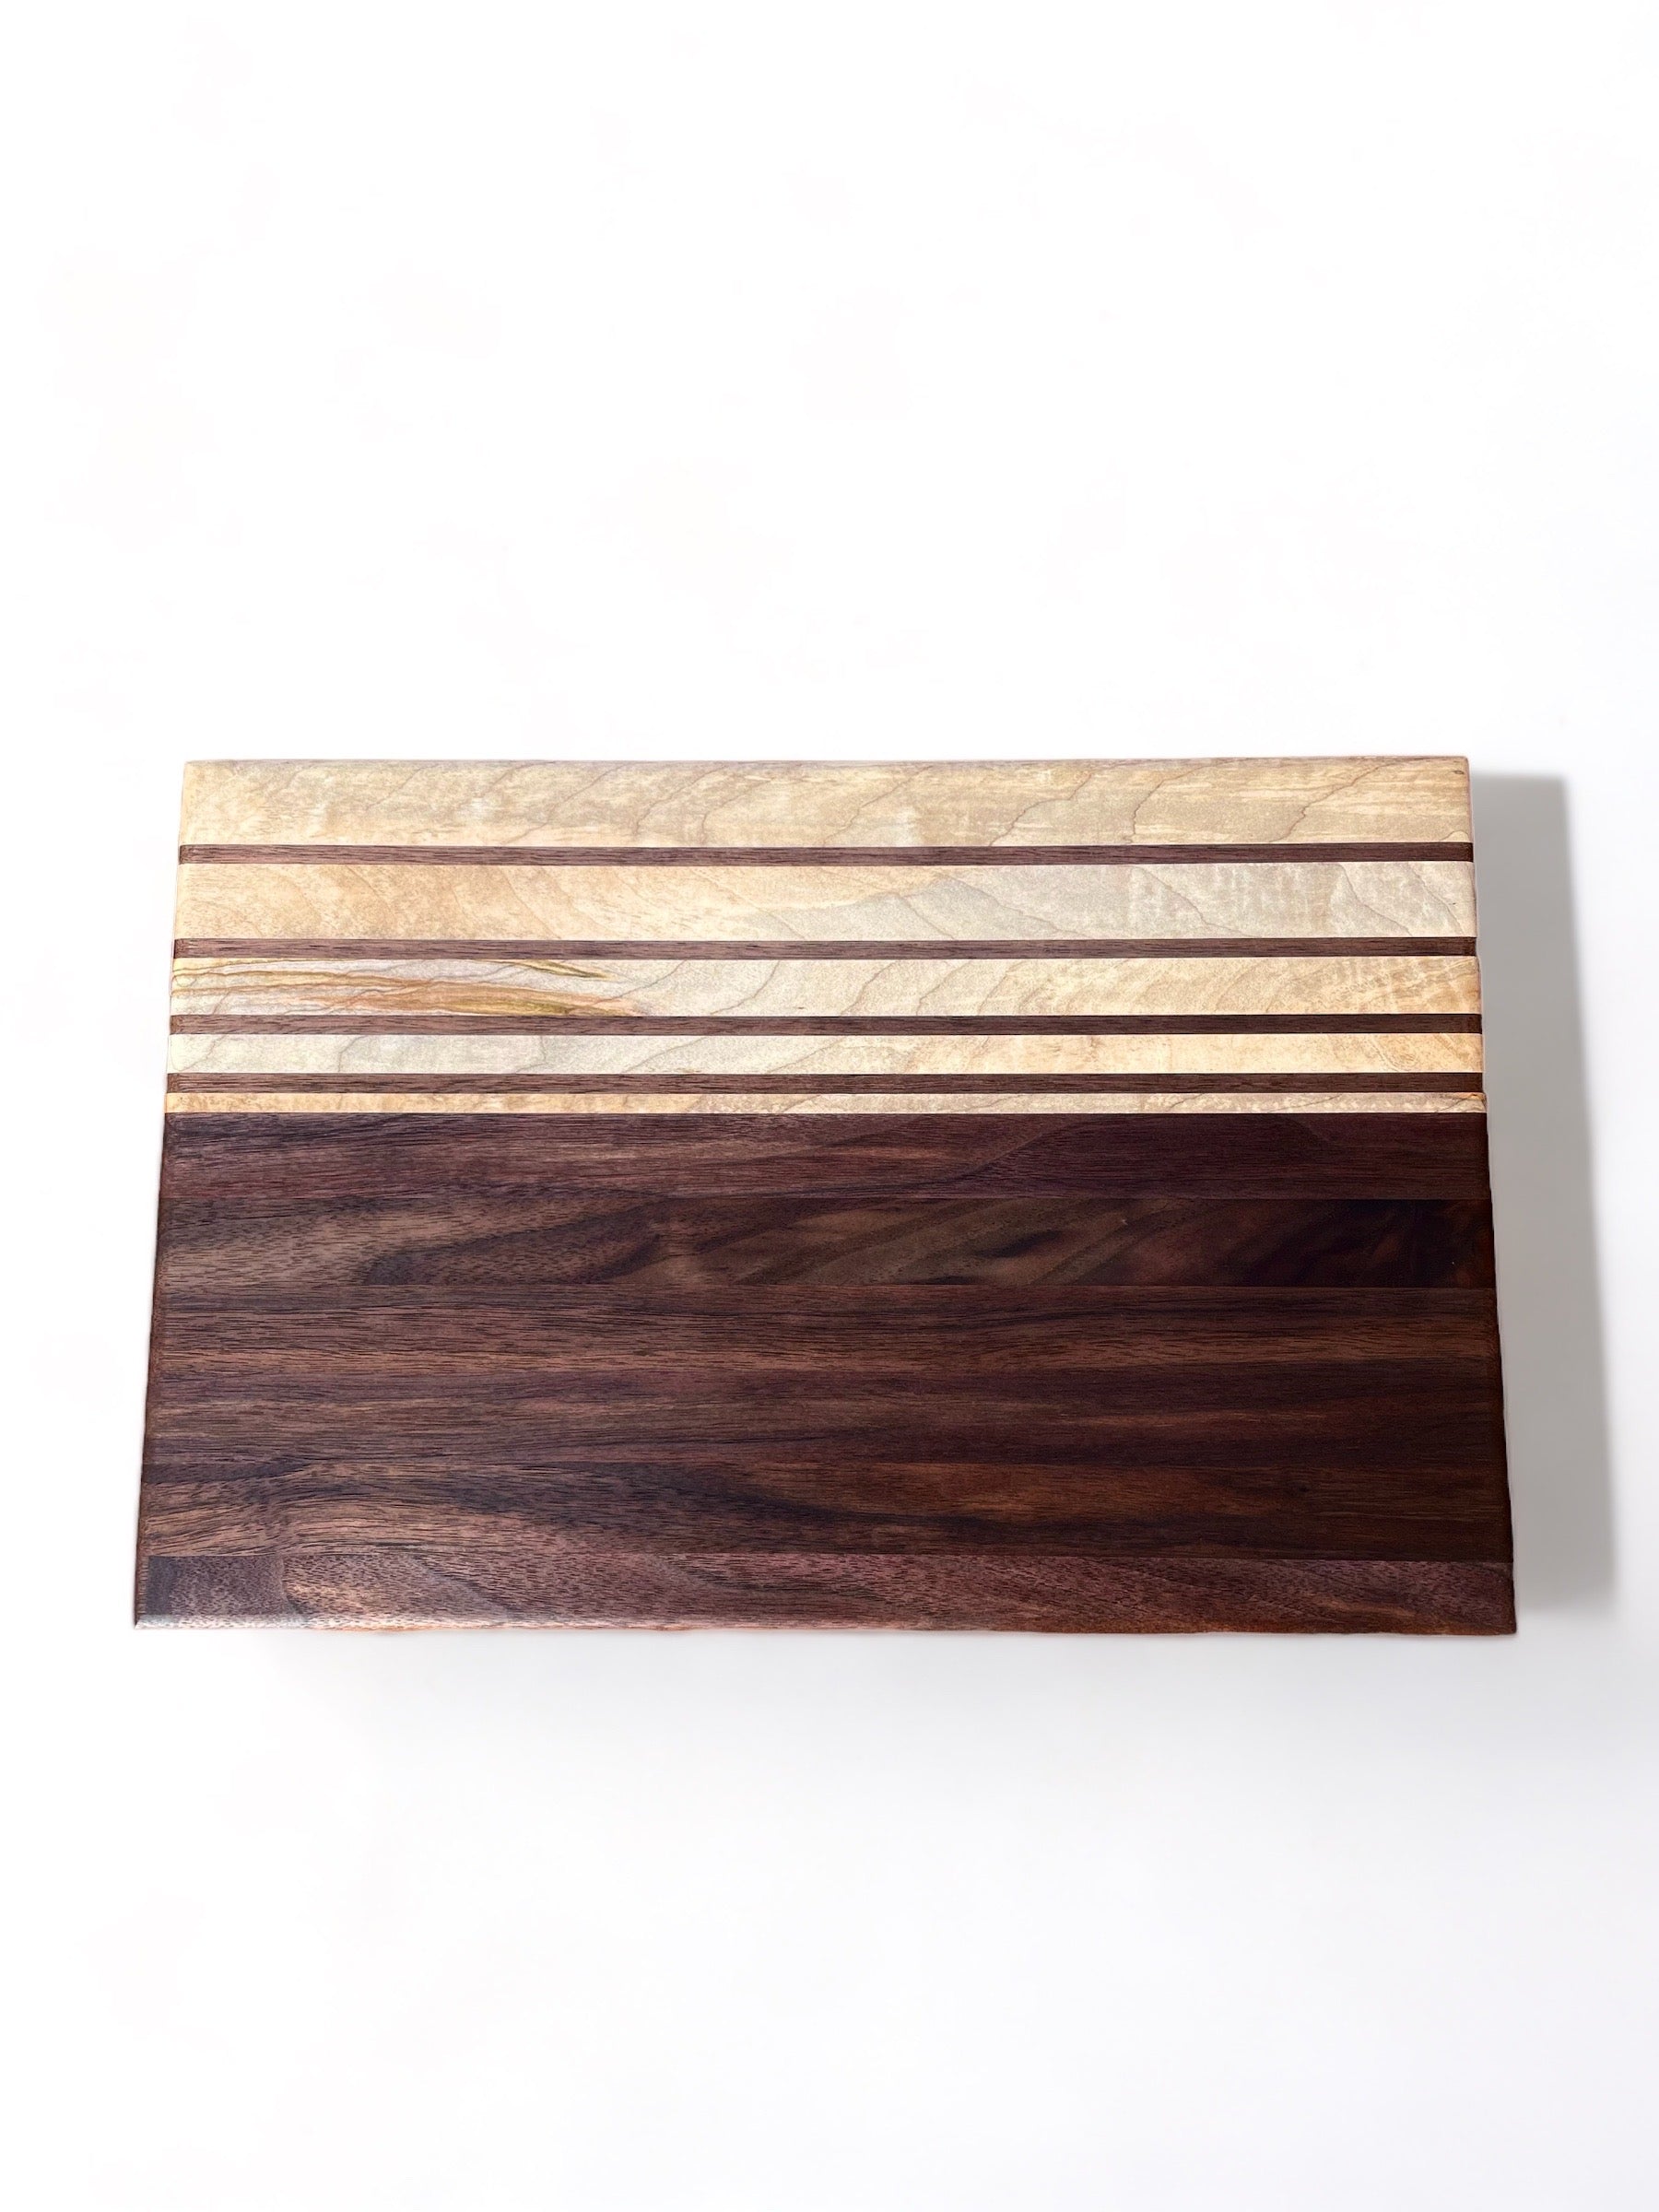 Walnut Cutting Board with figured Maple Inlays